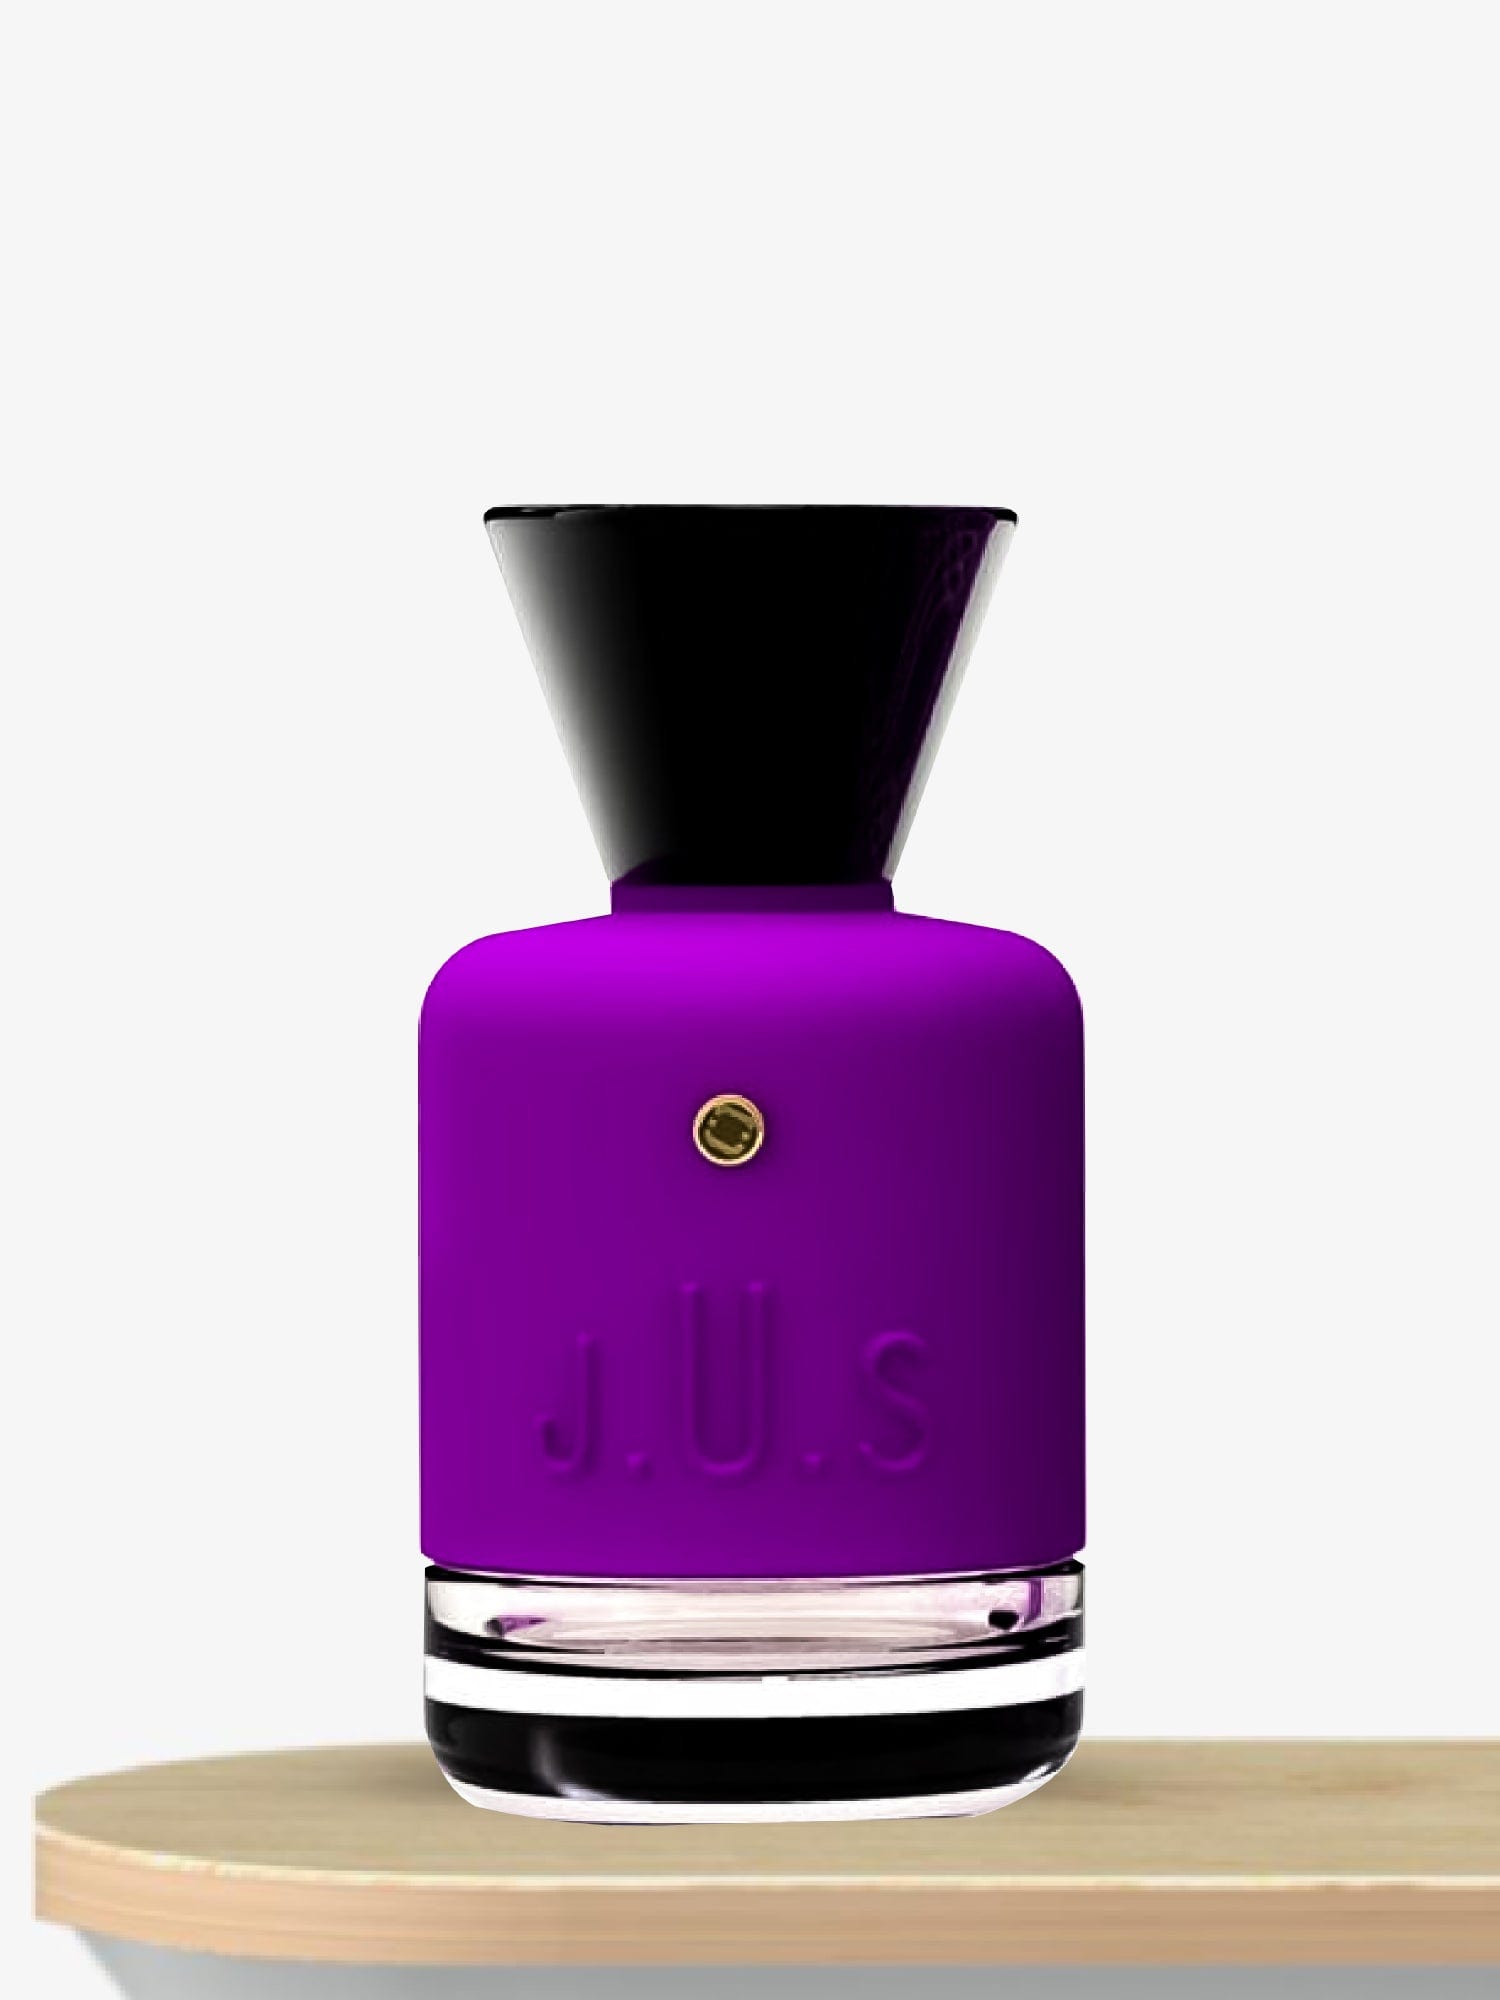 J.U.S Joyau Sensoriel Ultrahot Parfum 100 mL / Unisex